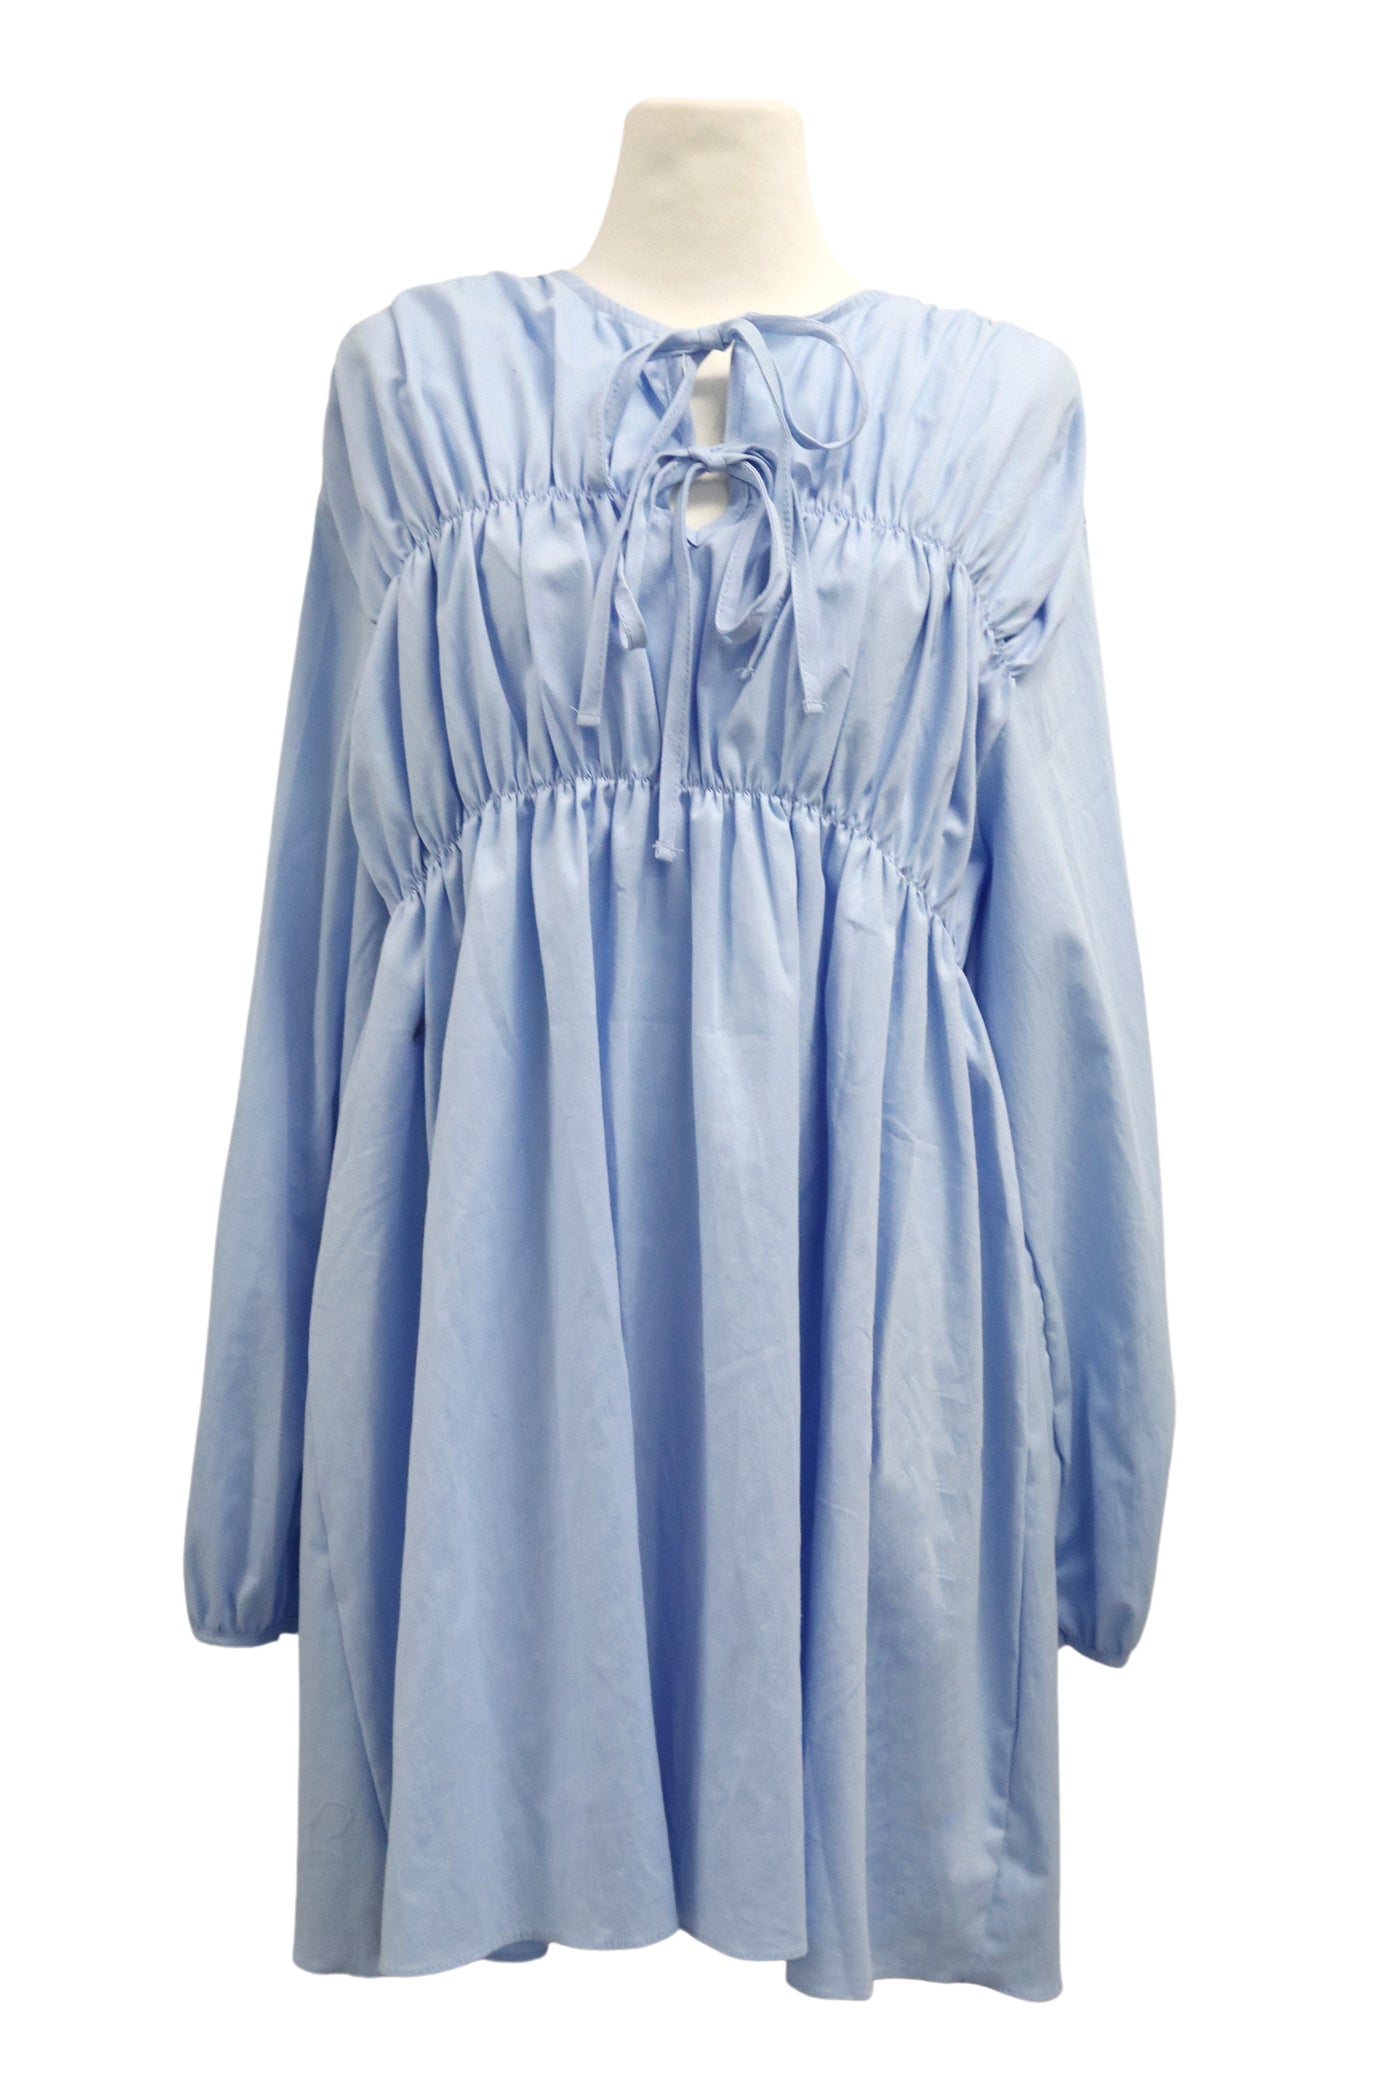 storets.com [NEW]Lexington Ruched Front Dress